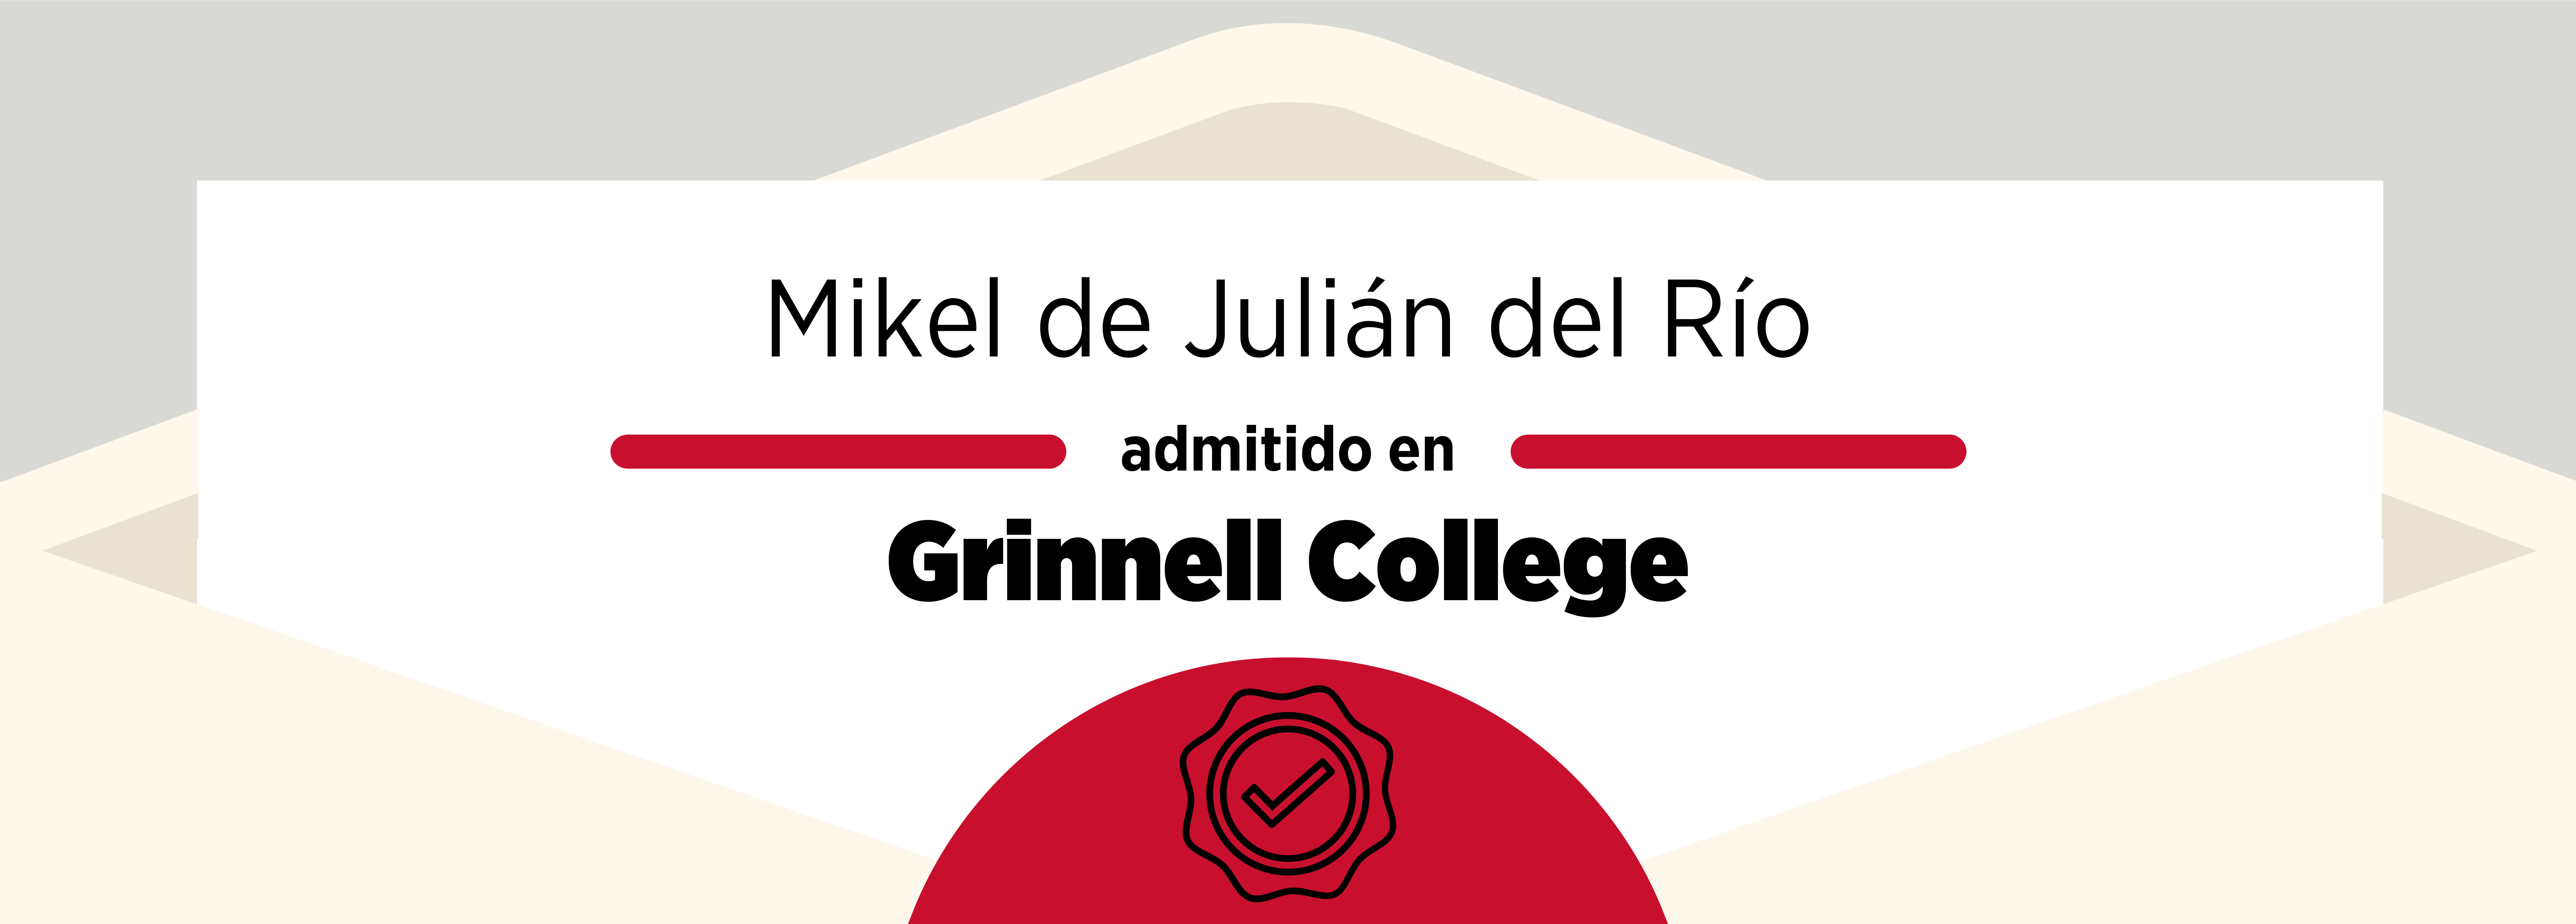 Admissions 2021: Mikel de Julián del Río & Grinnell College